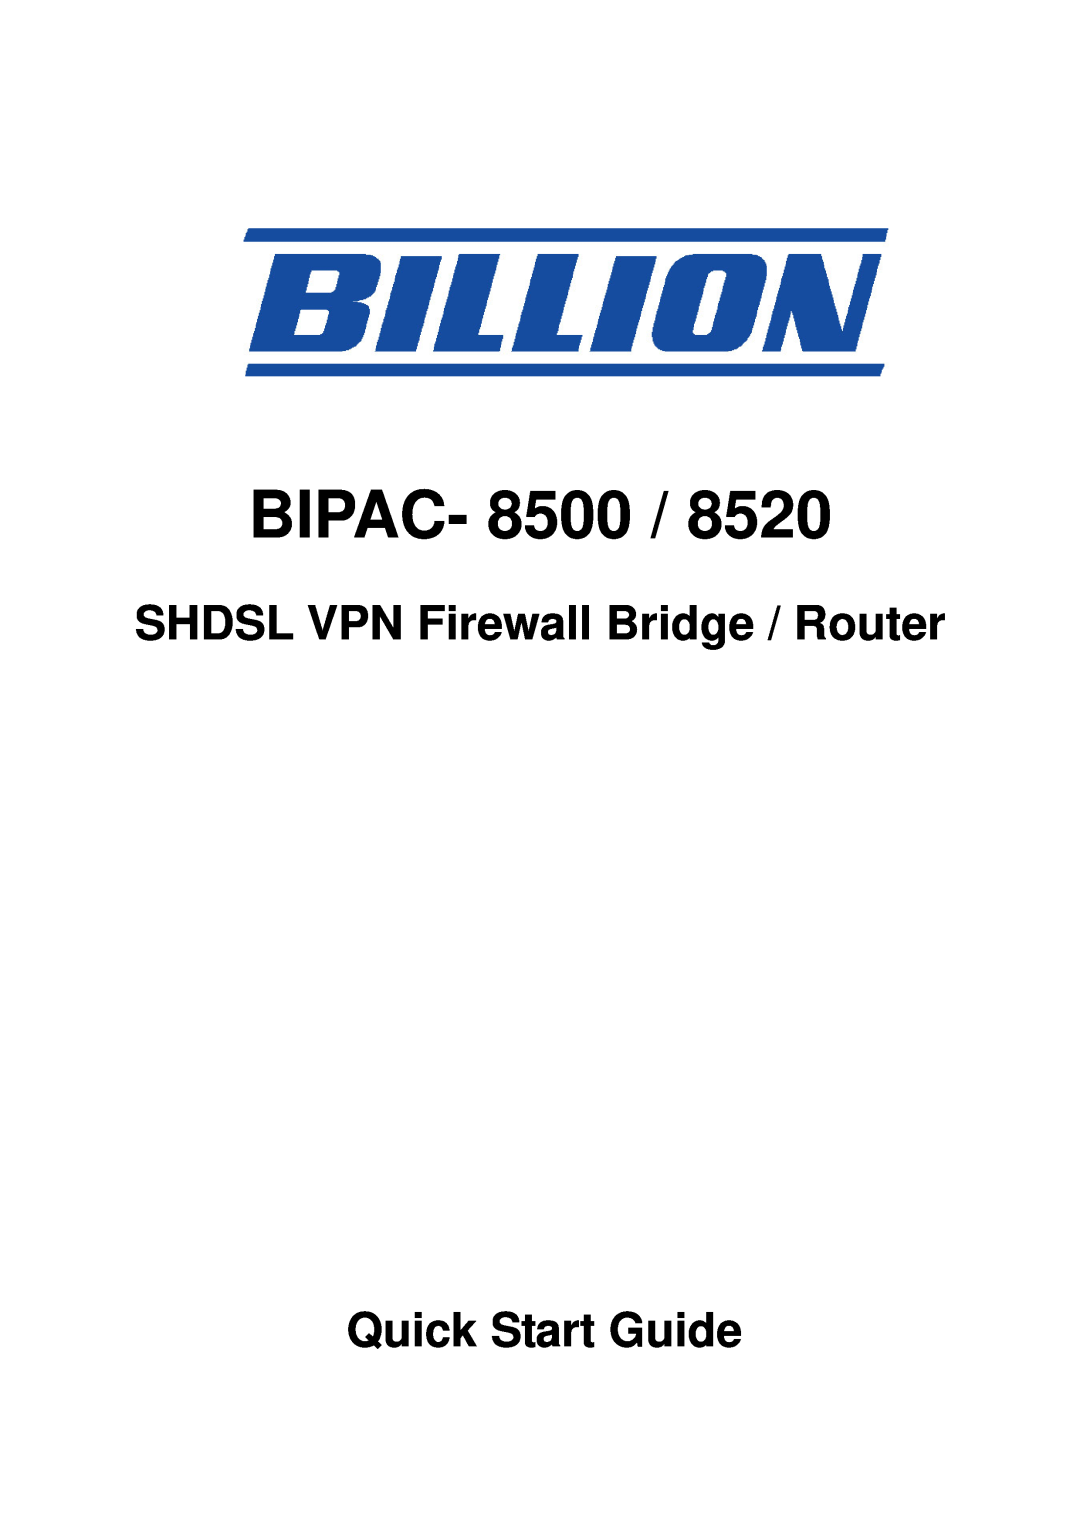 Billion Electric Company 8520 quick start BIPAC- 8500, SHDSL VPN Firewall Bridge / Router Quick Start Guide 